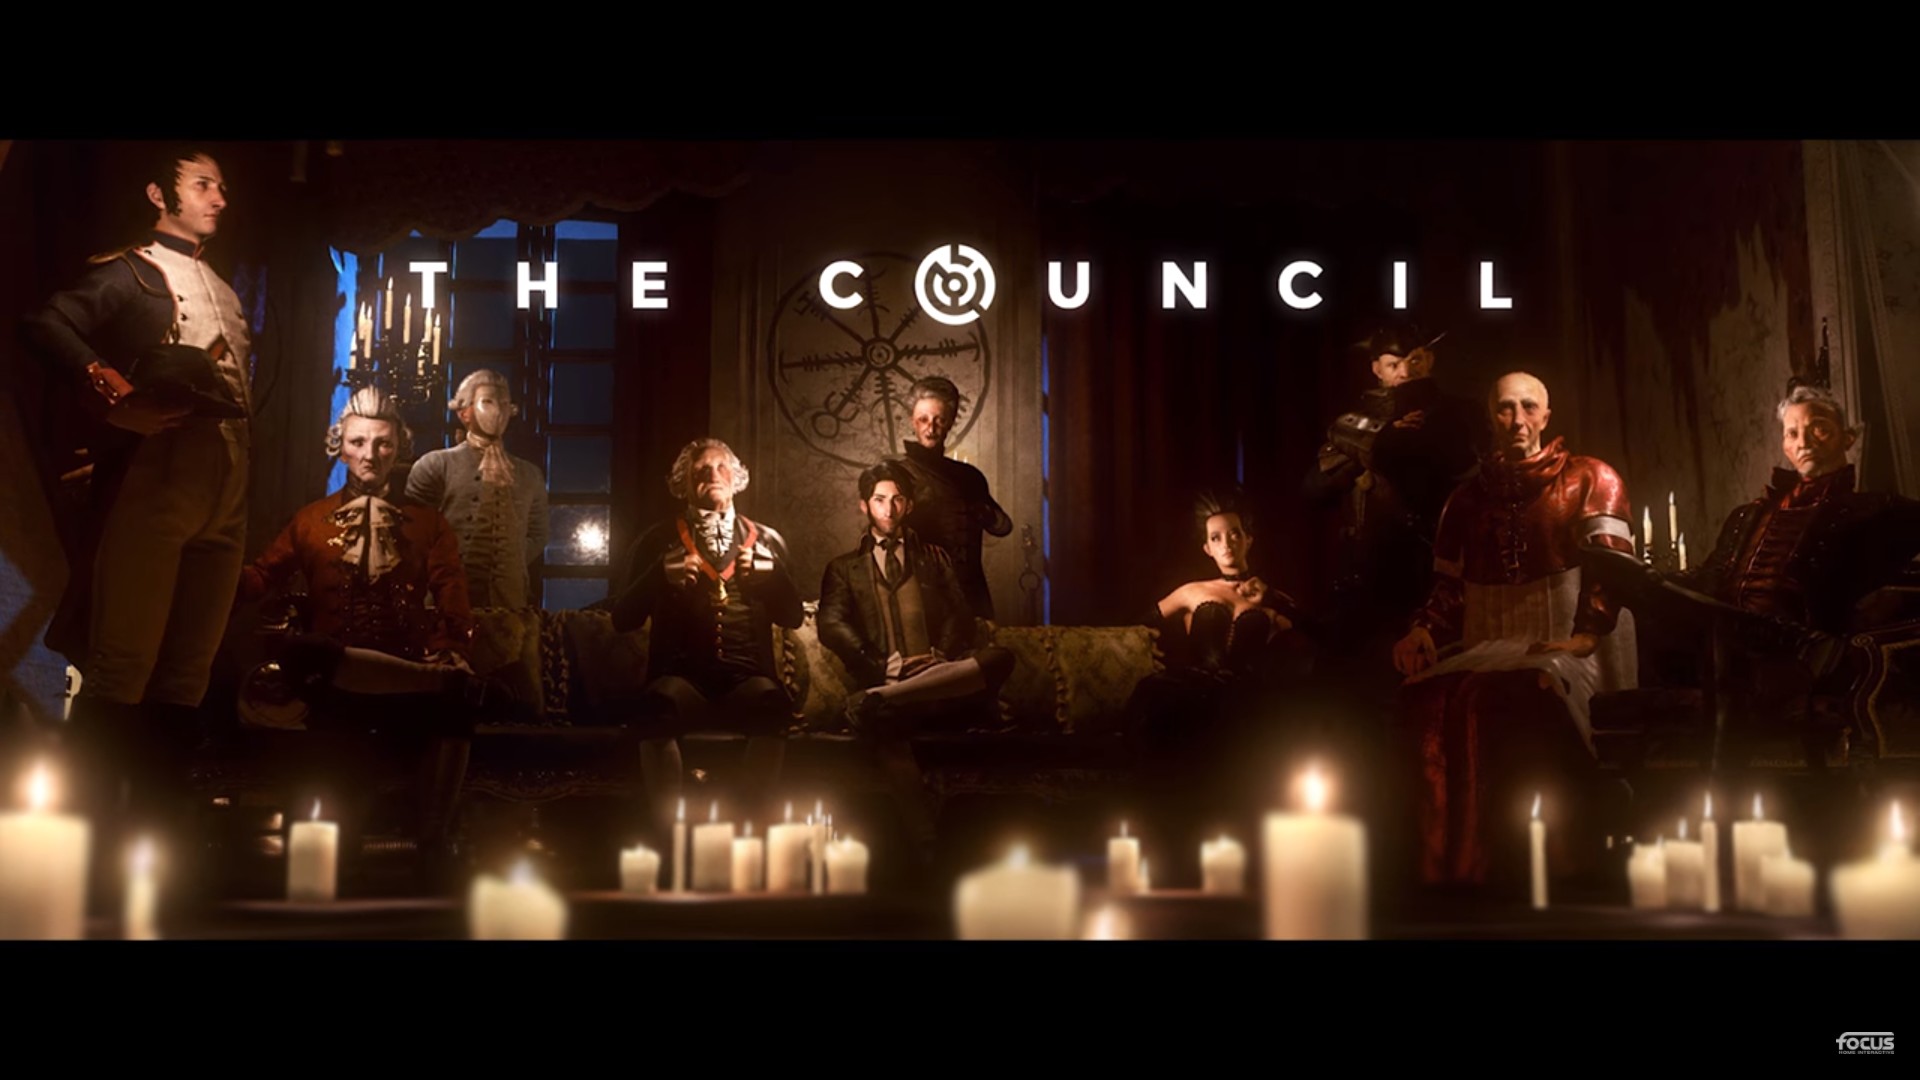 The council illu 12